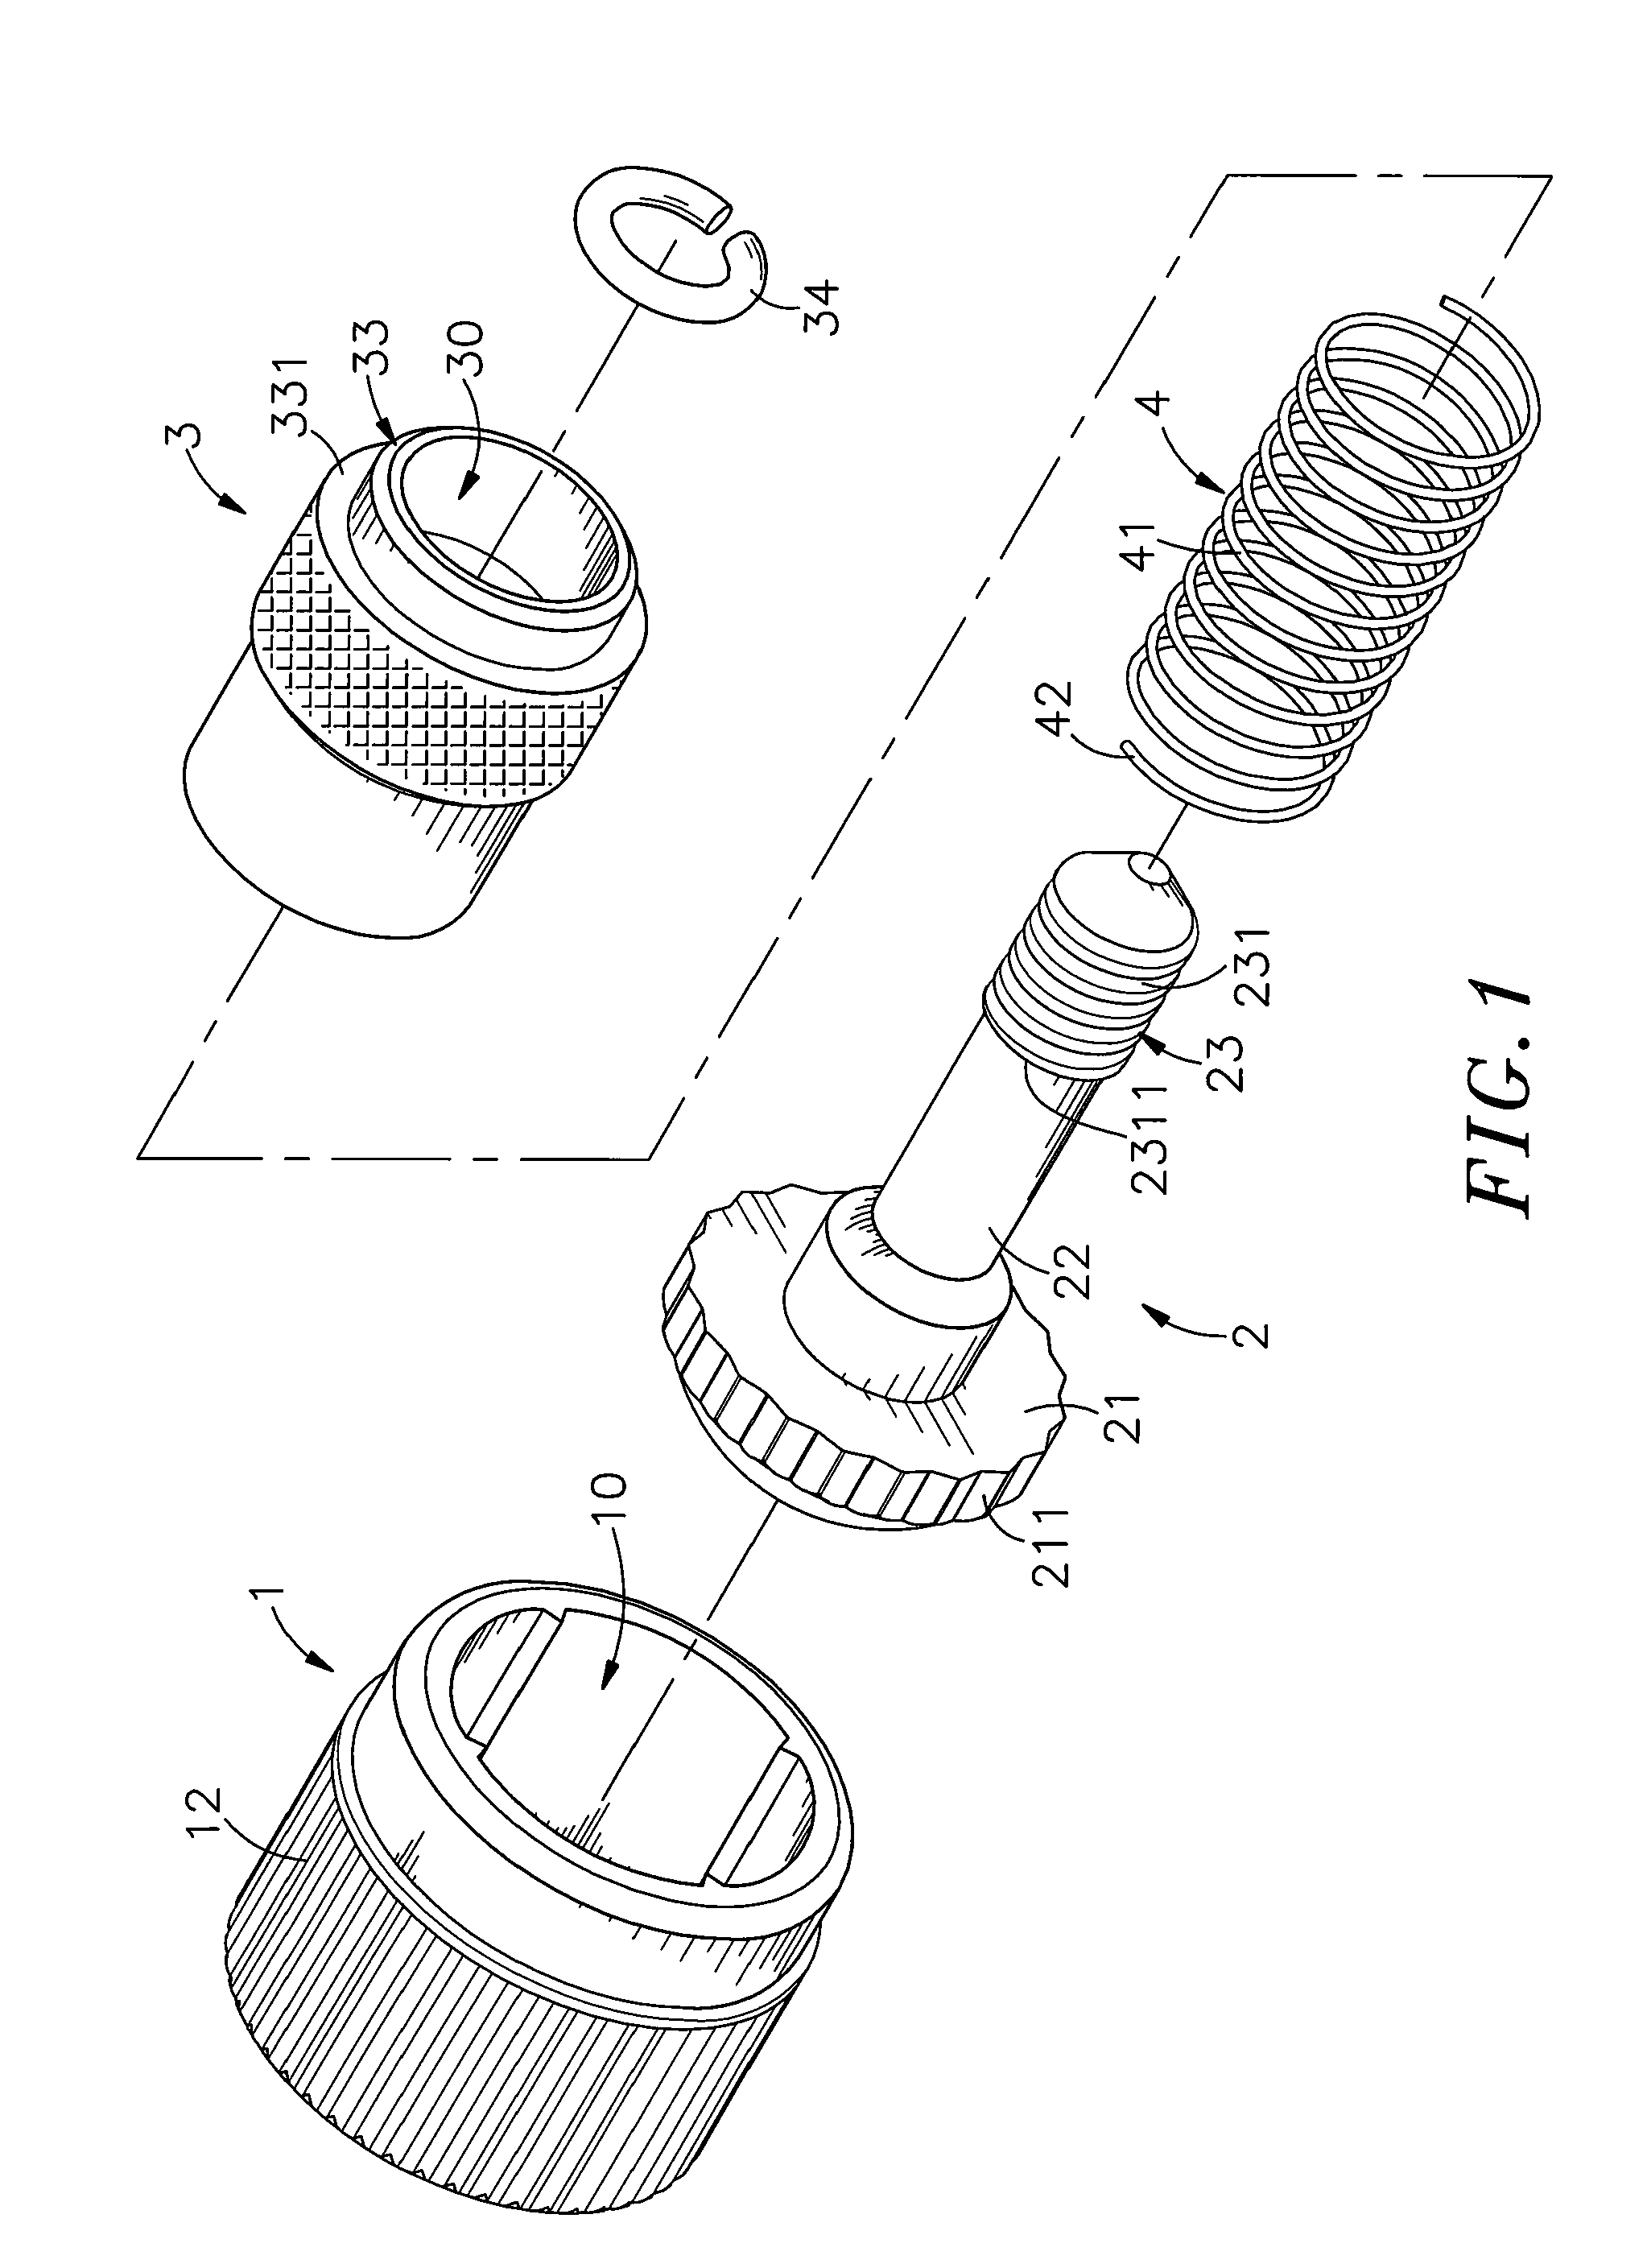 Method for the fabrication of a screw member for plate member fastener